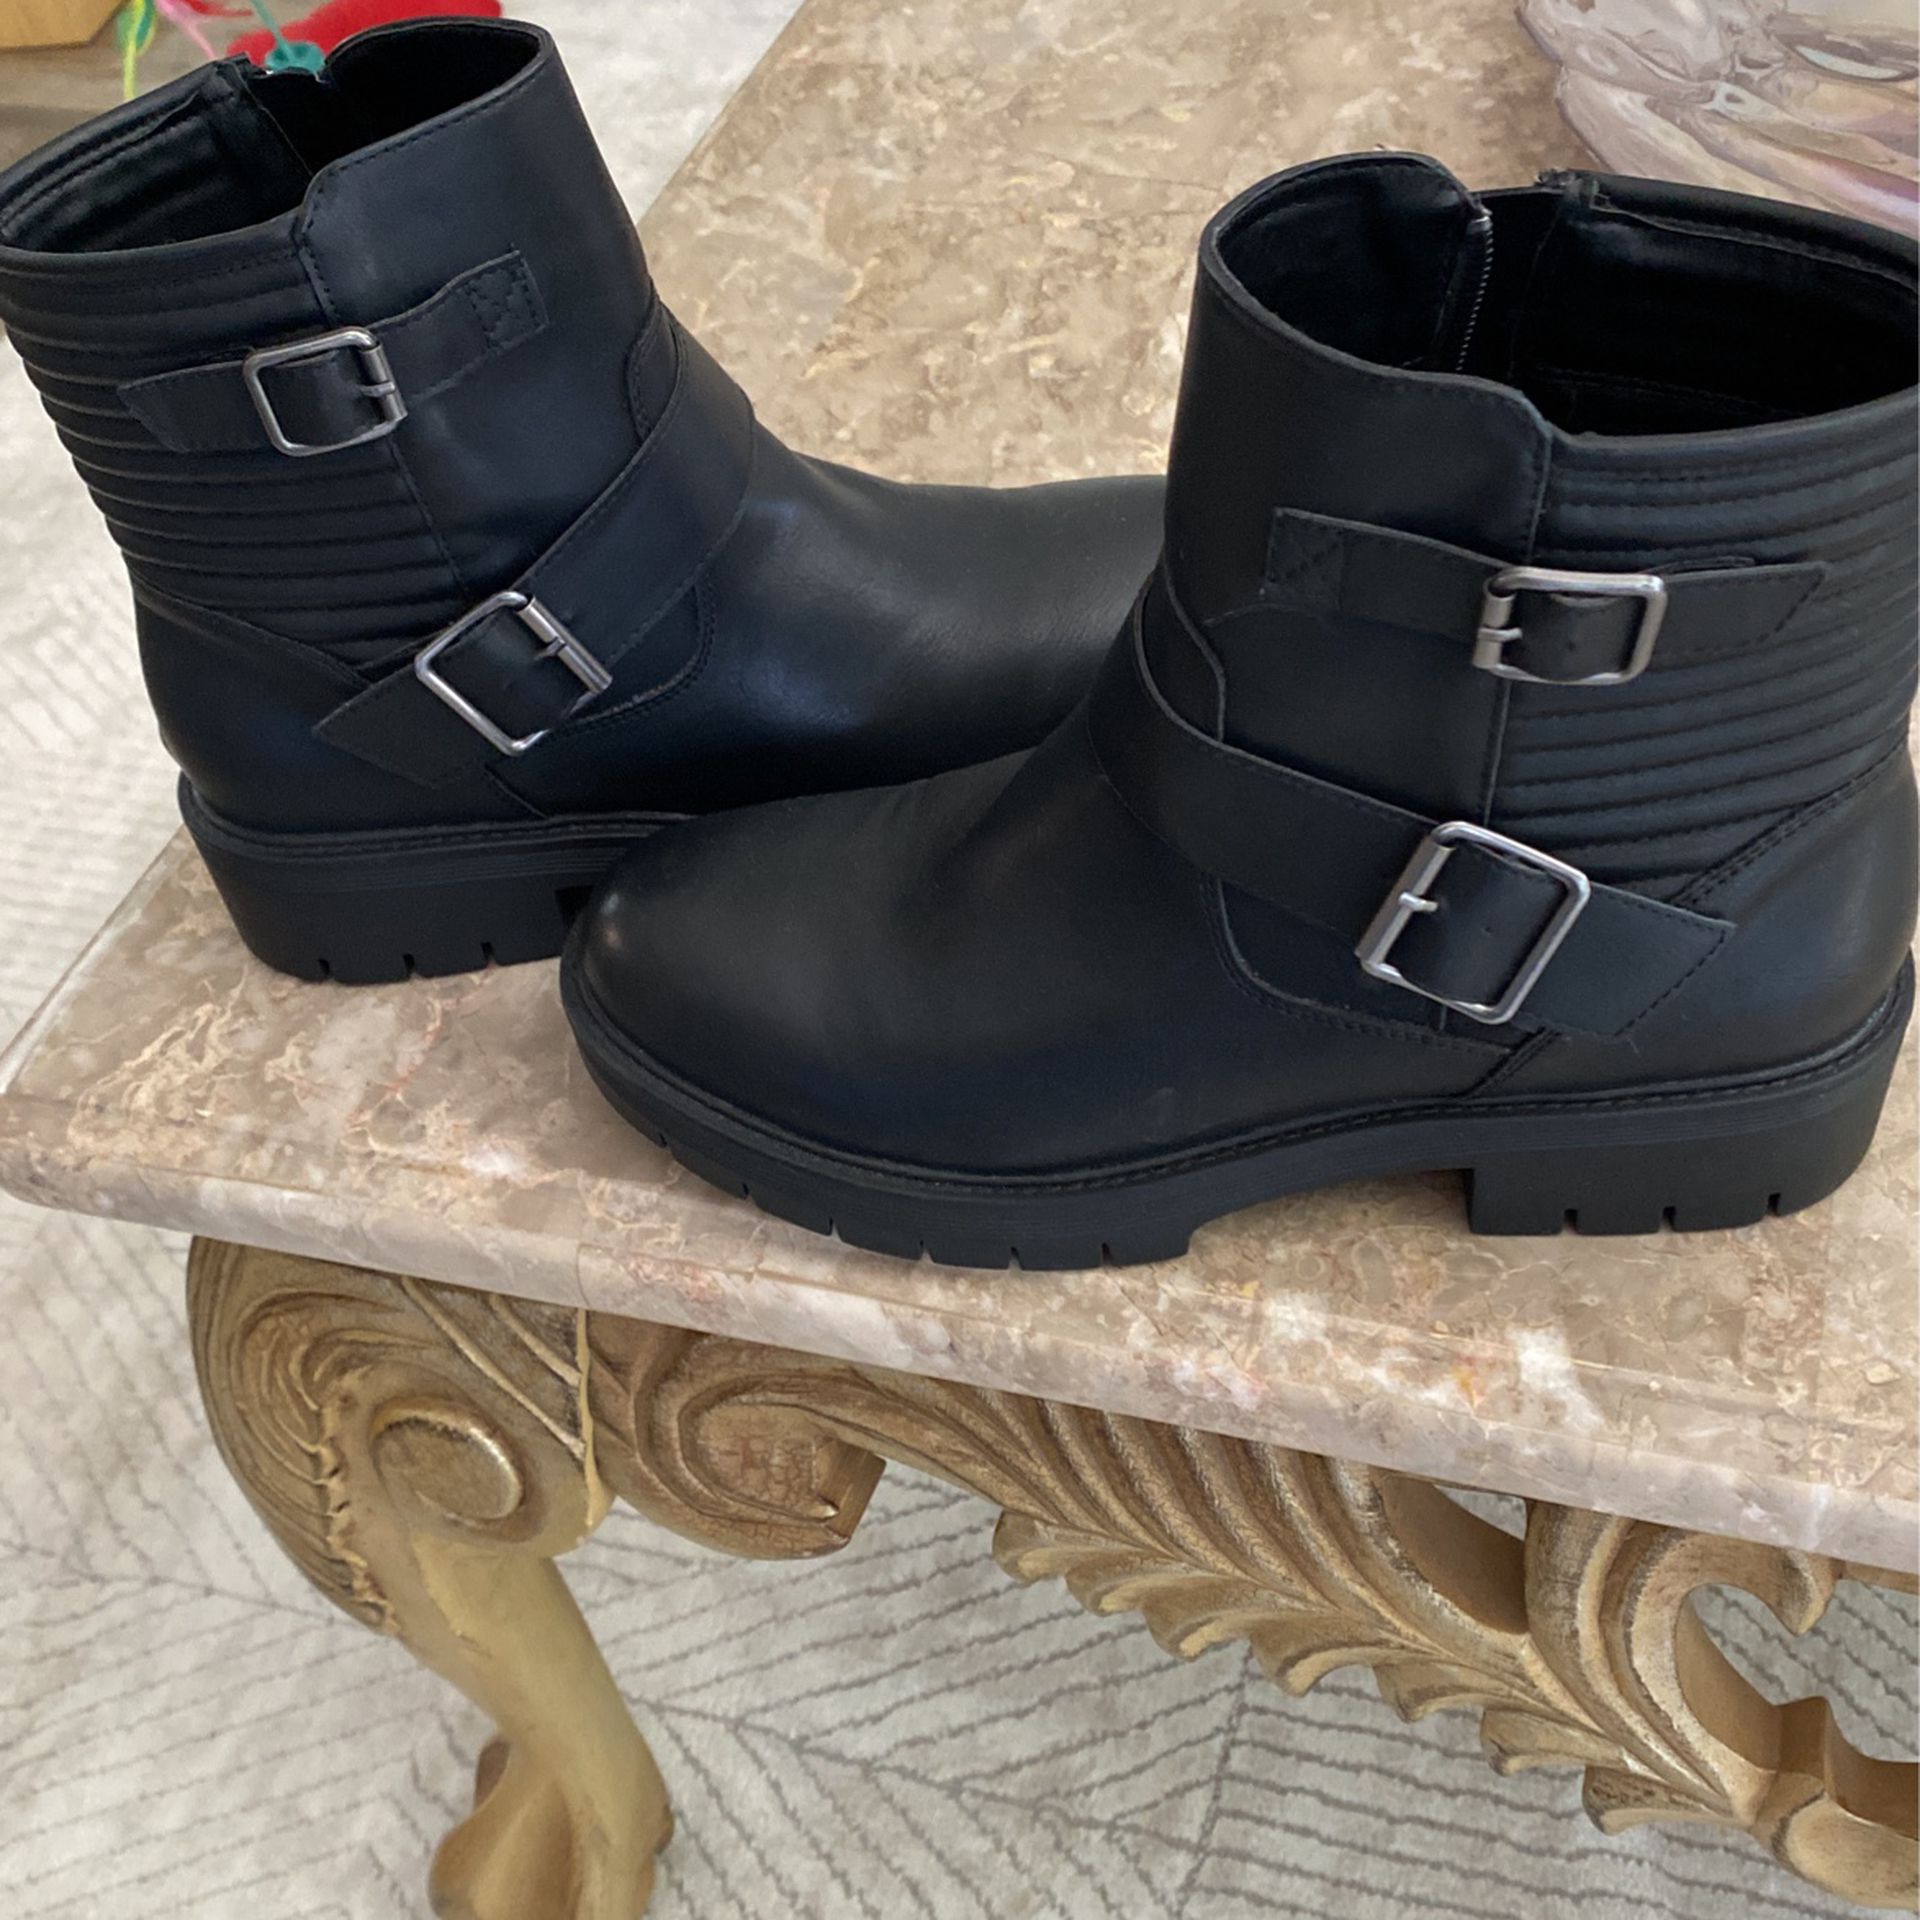 New Black Boots 